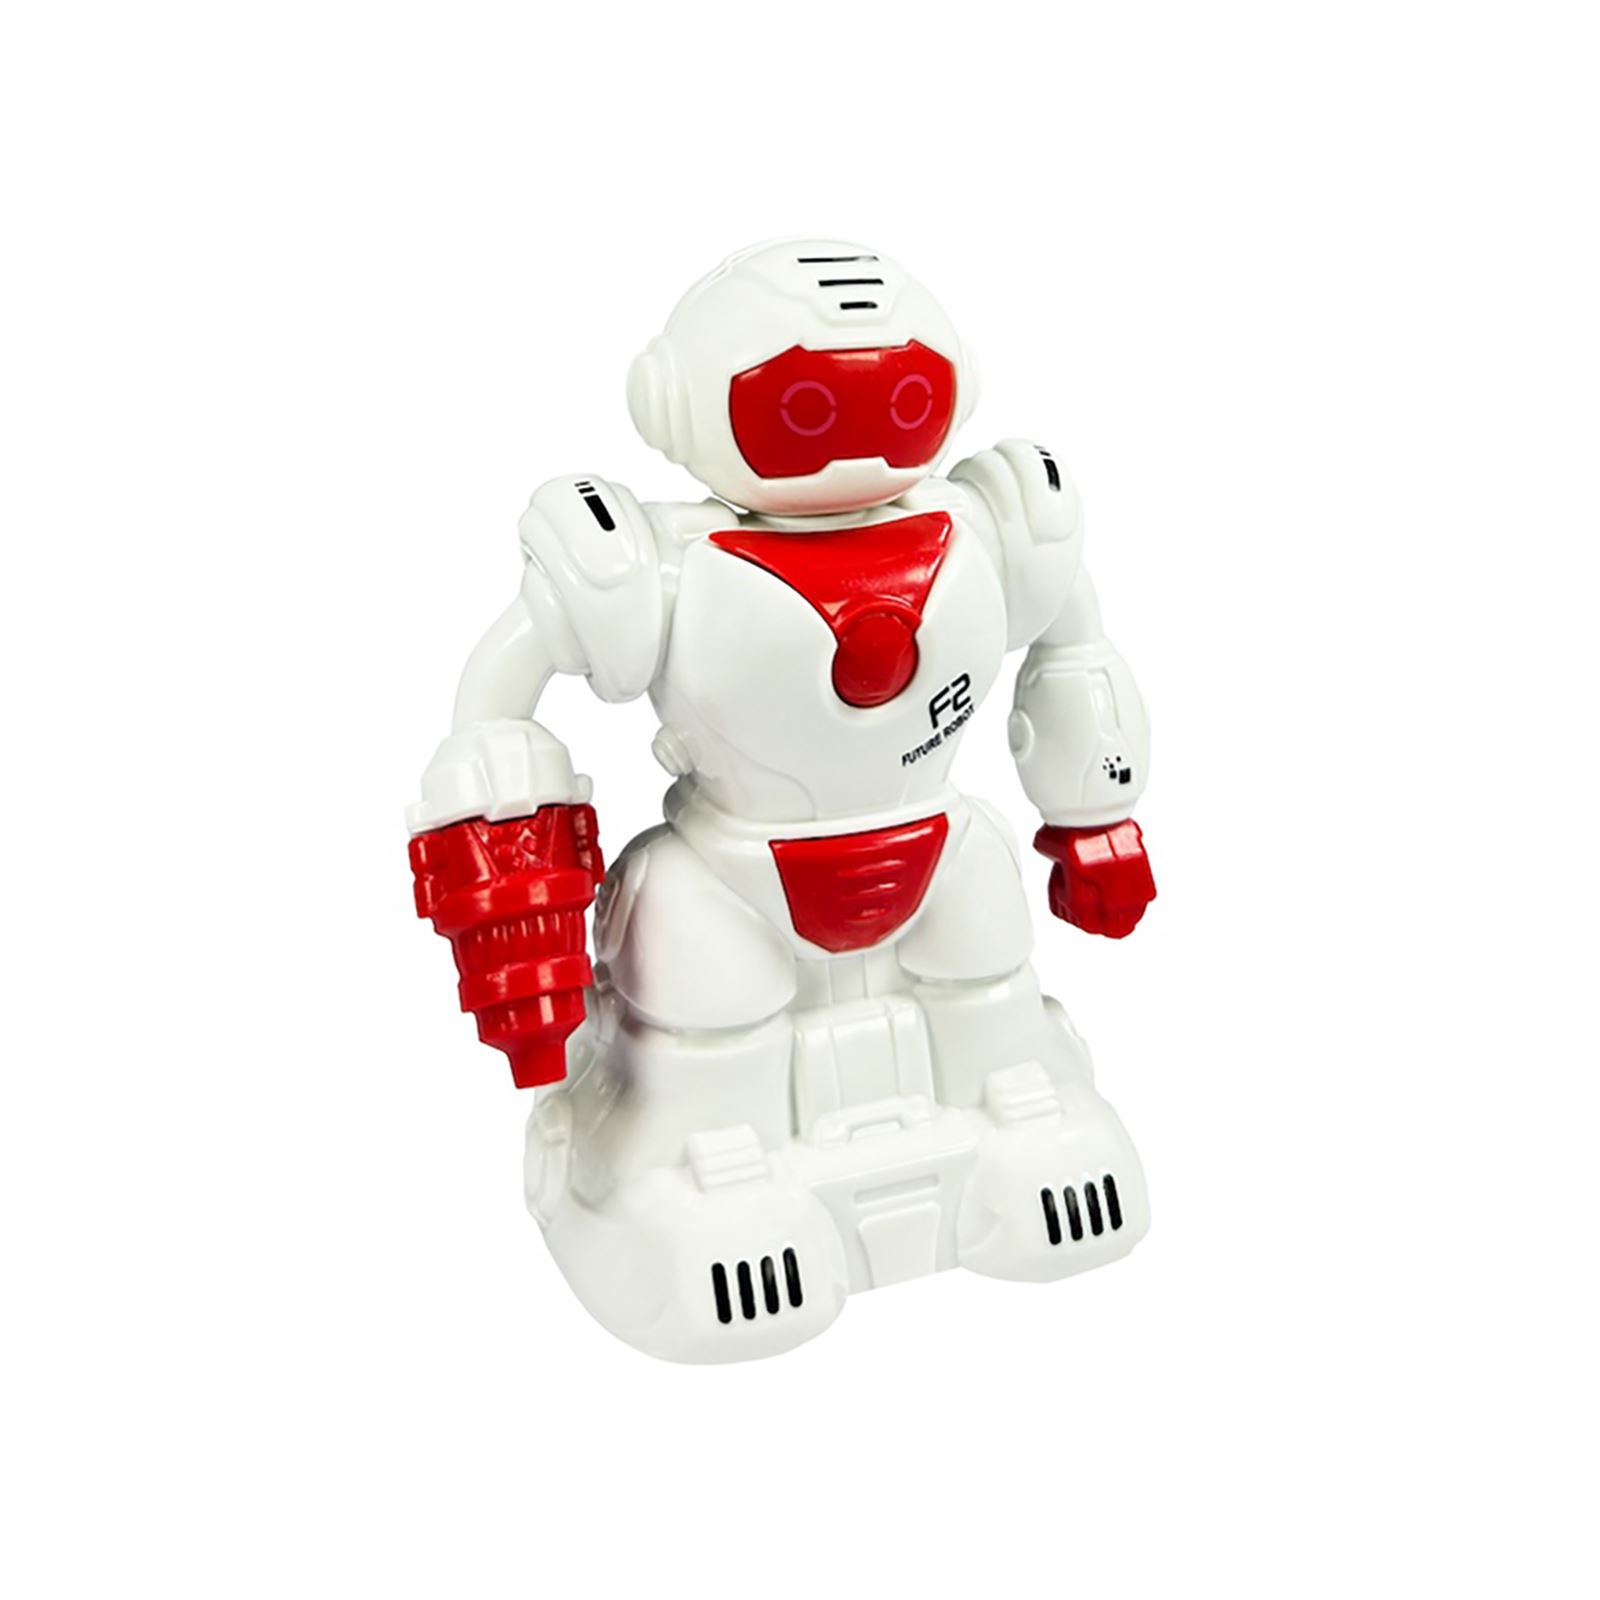 Vardem Sürtmelı Süper Kahraman Robot Kırmızı